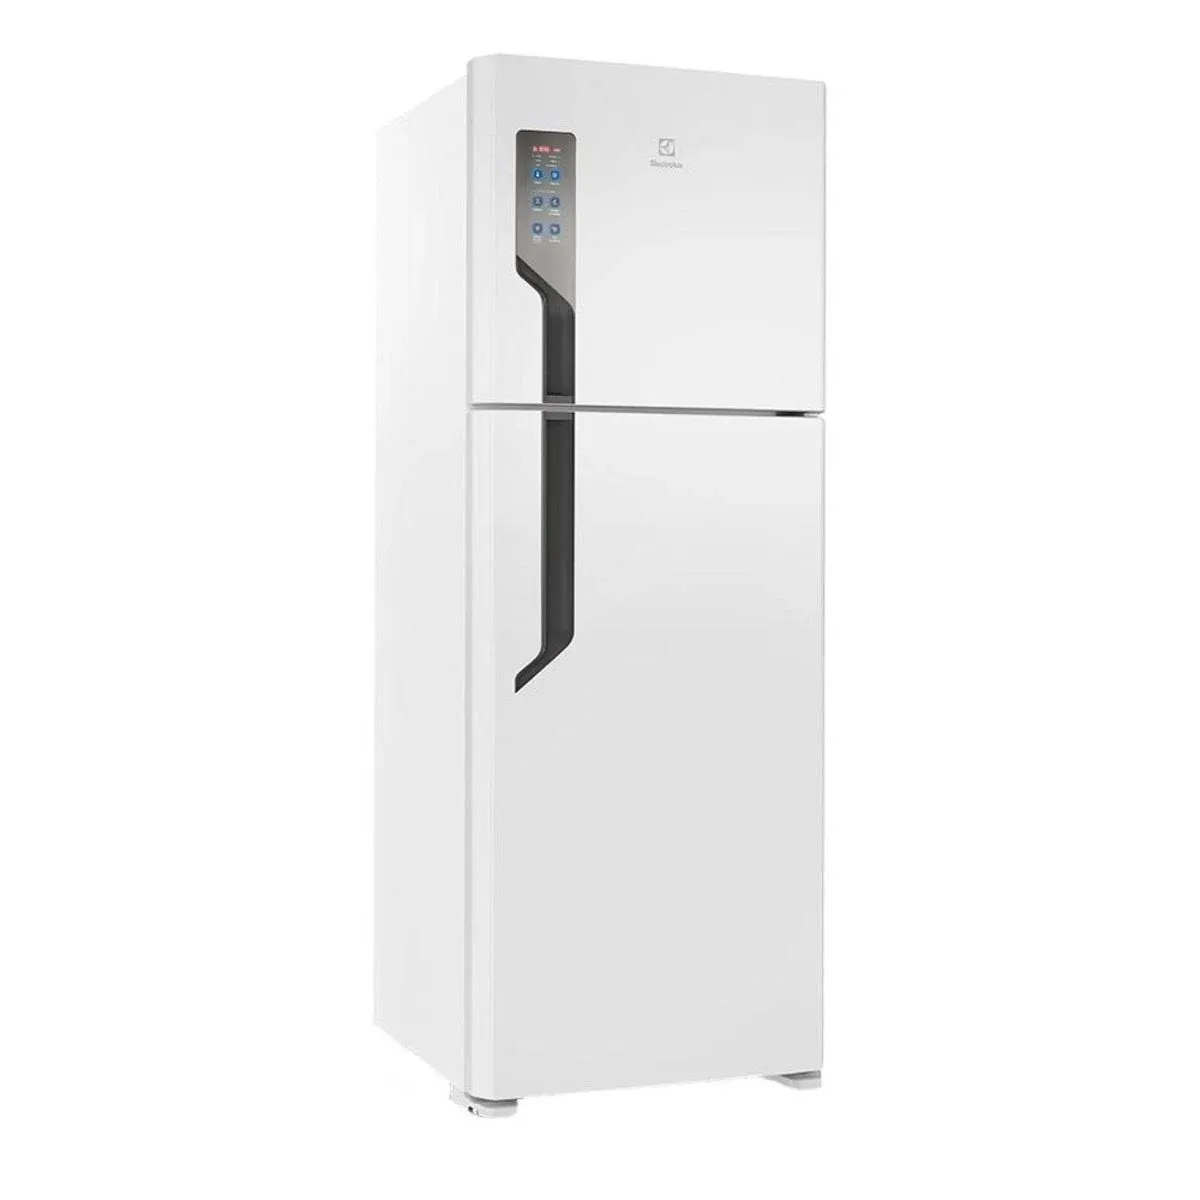 Product image Refrigerador Electrolux TF56 474 Litros Top Freezer Frost Free Branco